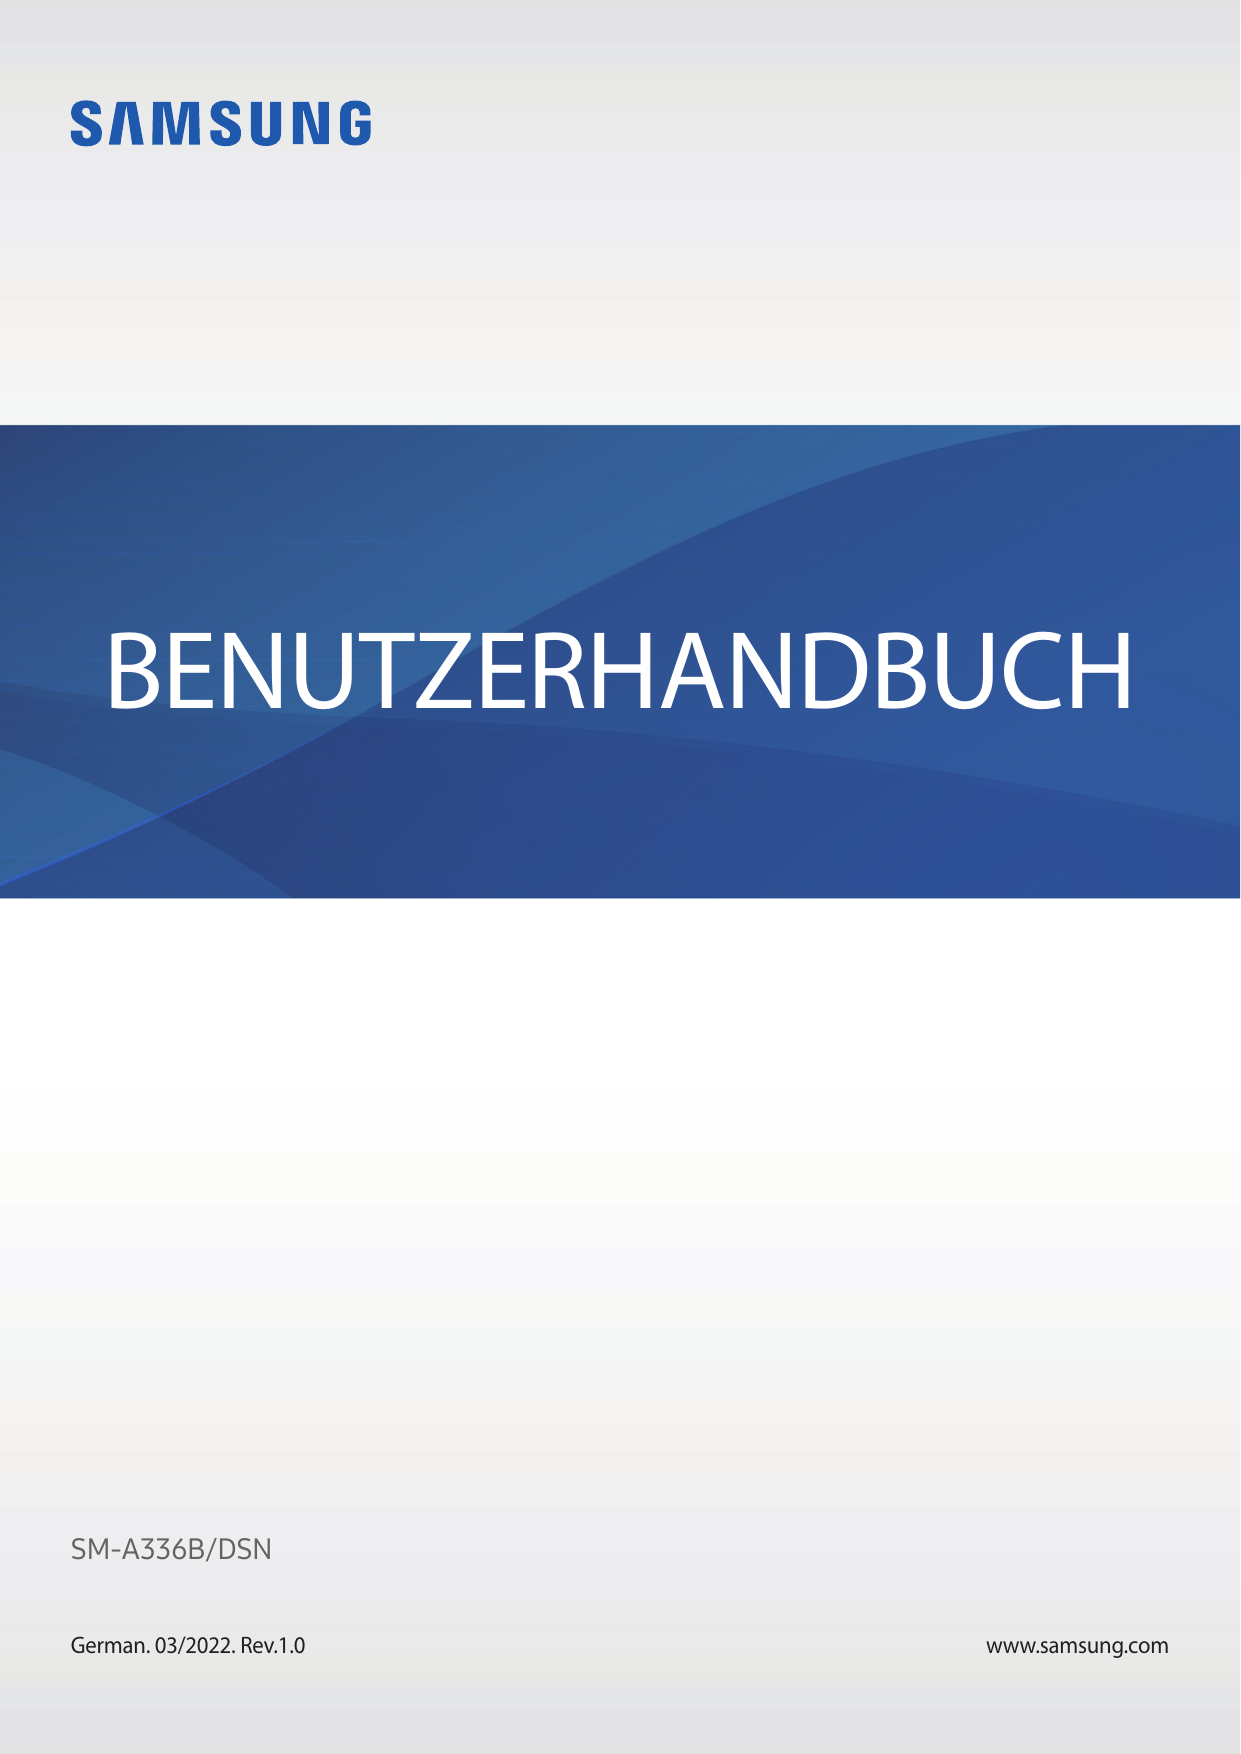 BENUTZERHANDBUCHSM-A336B/DSNGerman. 03/2022. Rev.1.0www.samsung.com